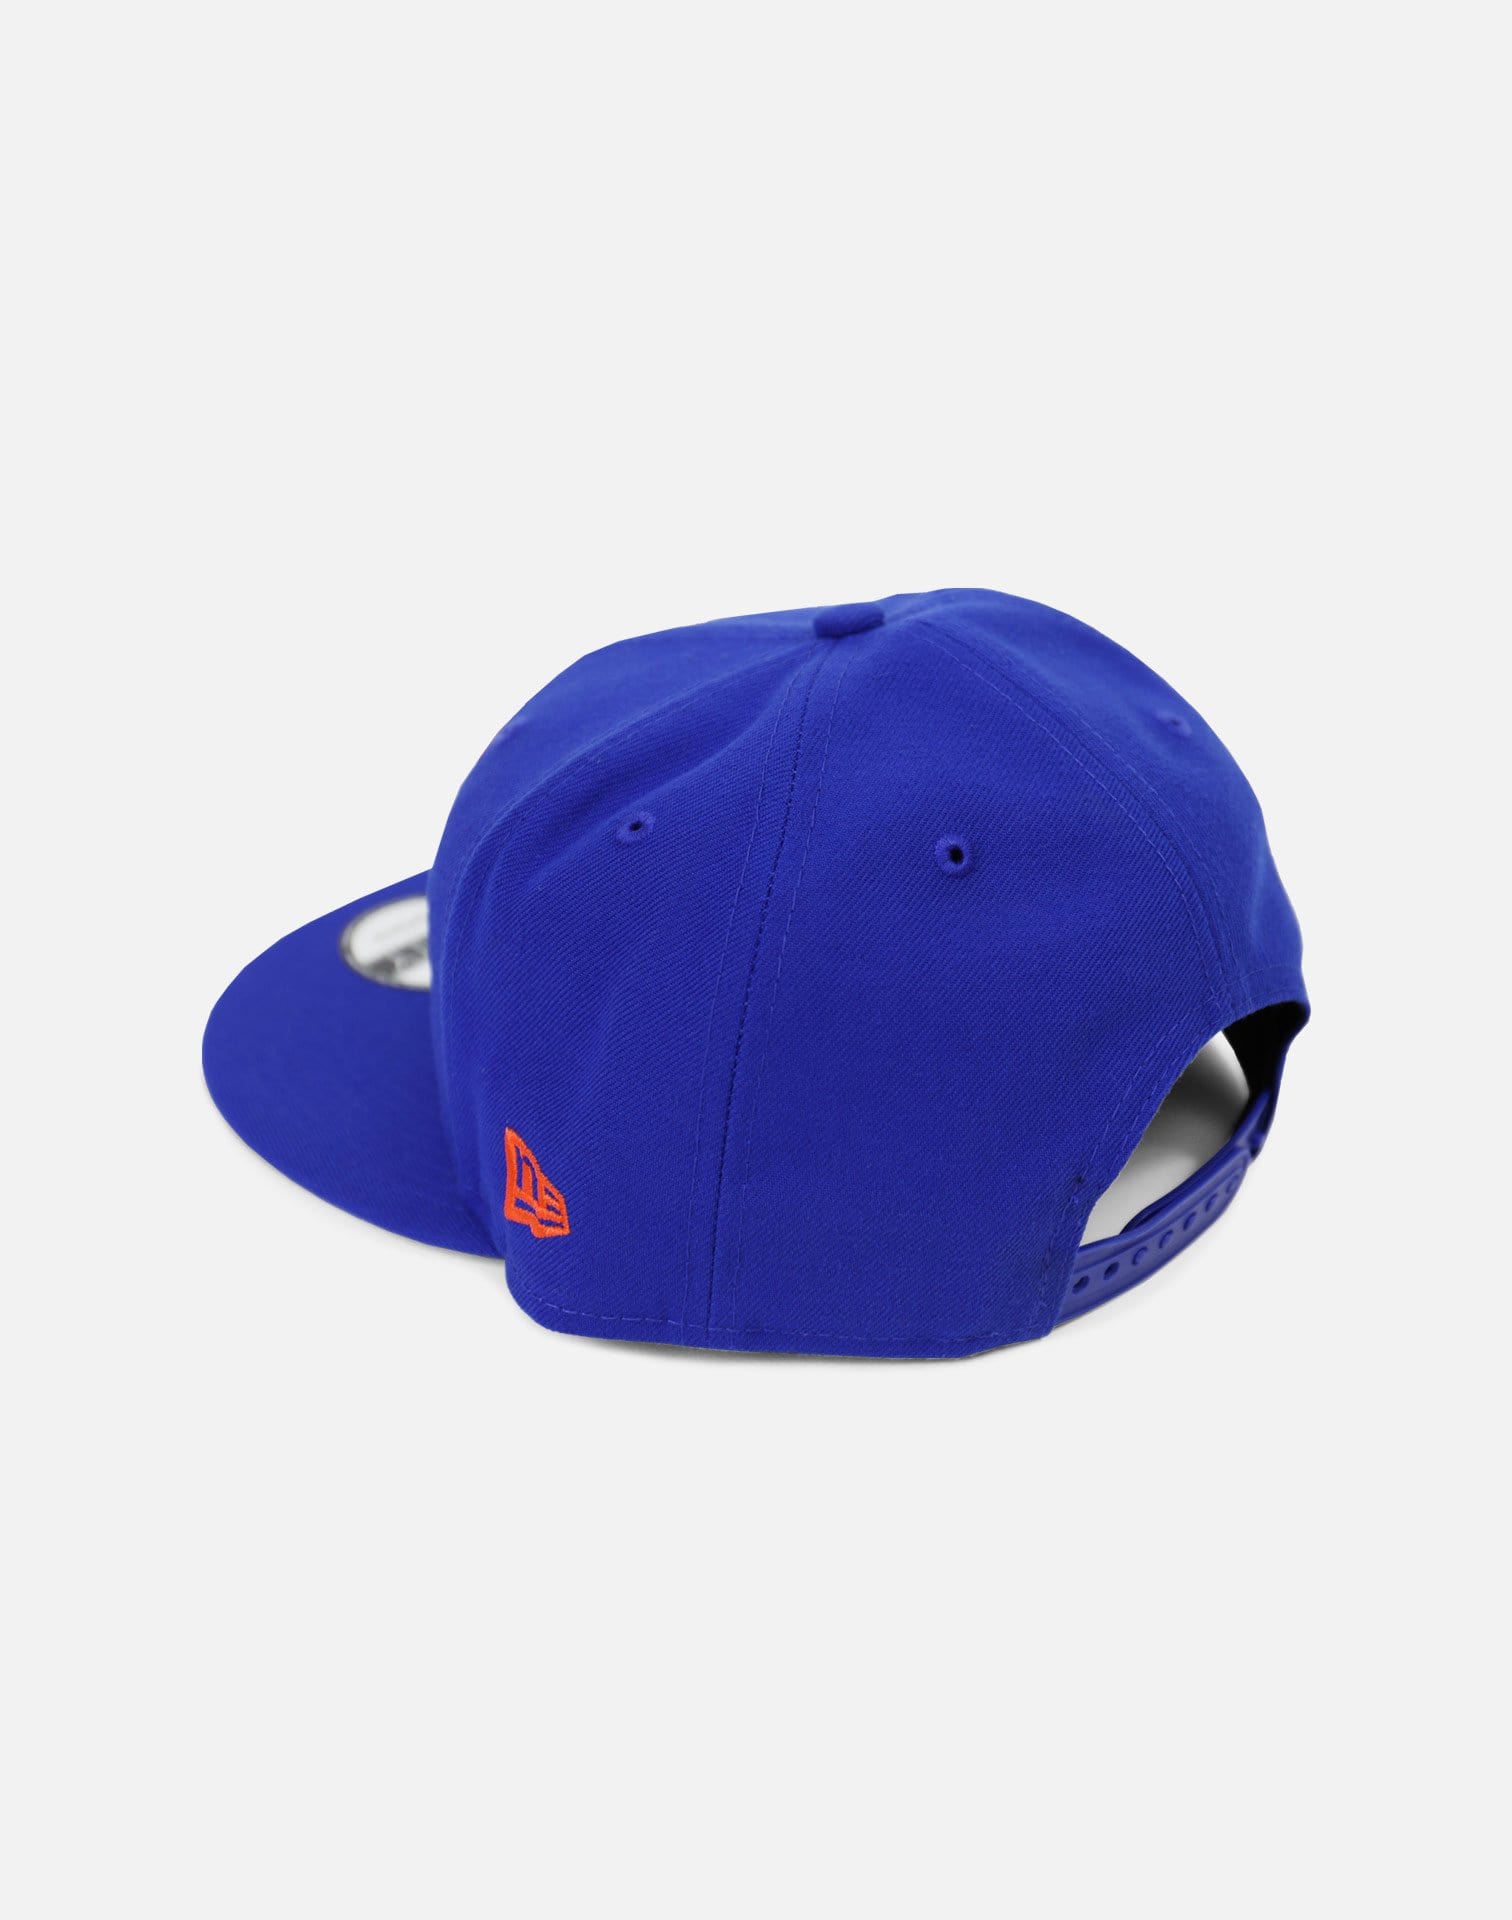 New Era New York Knicks Golden Hit Snapback Hat (Blue)